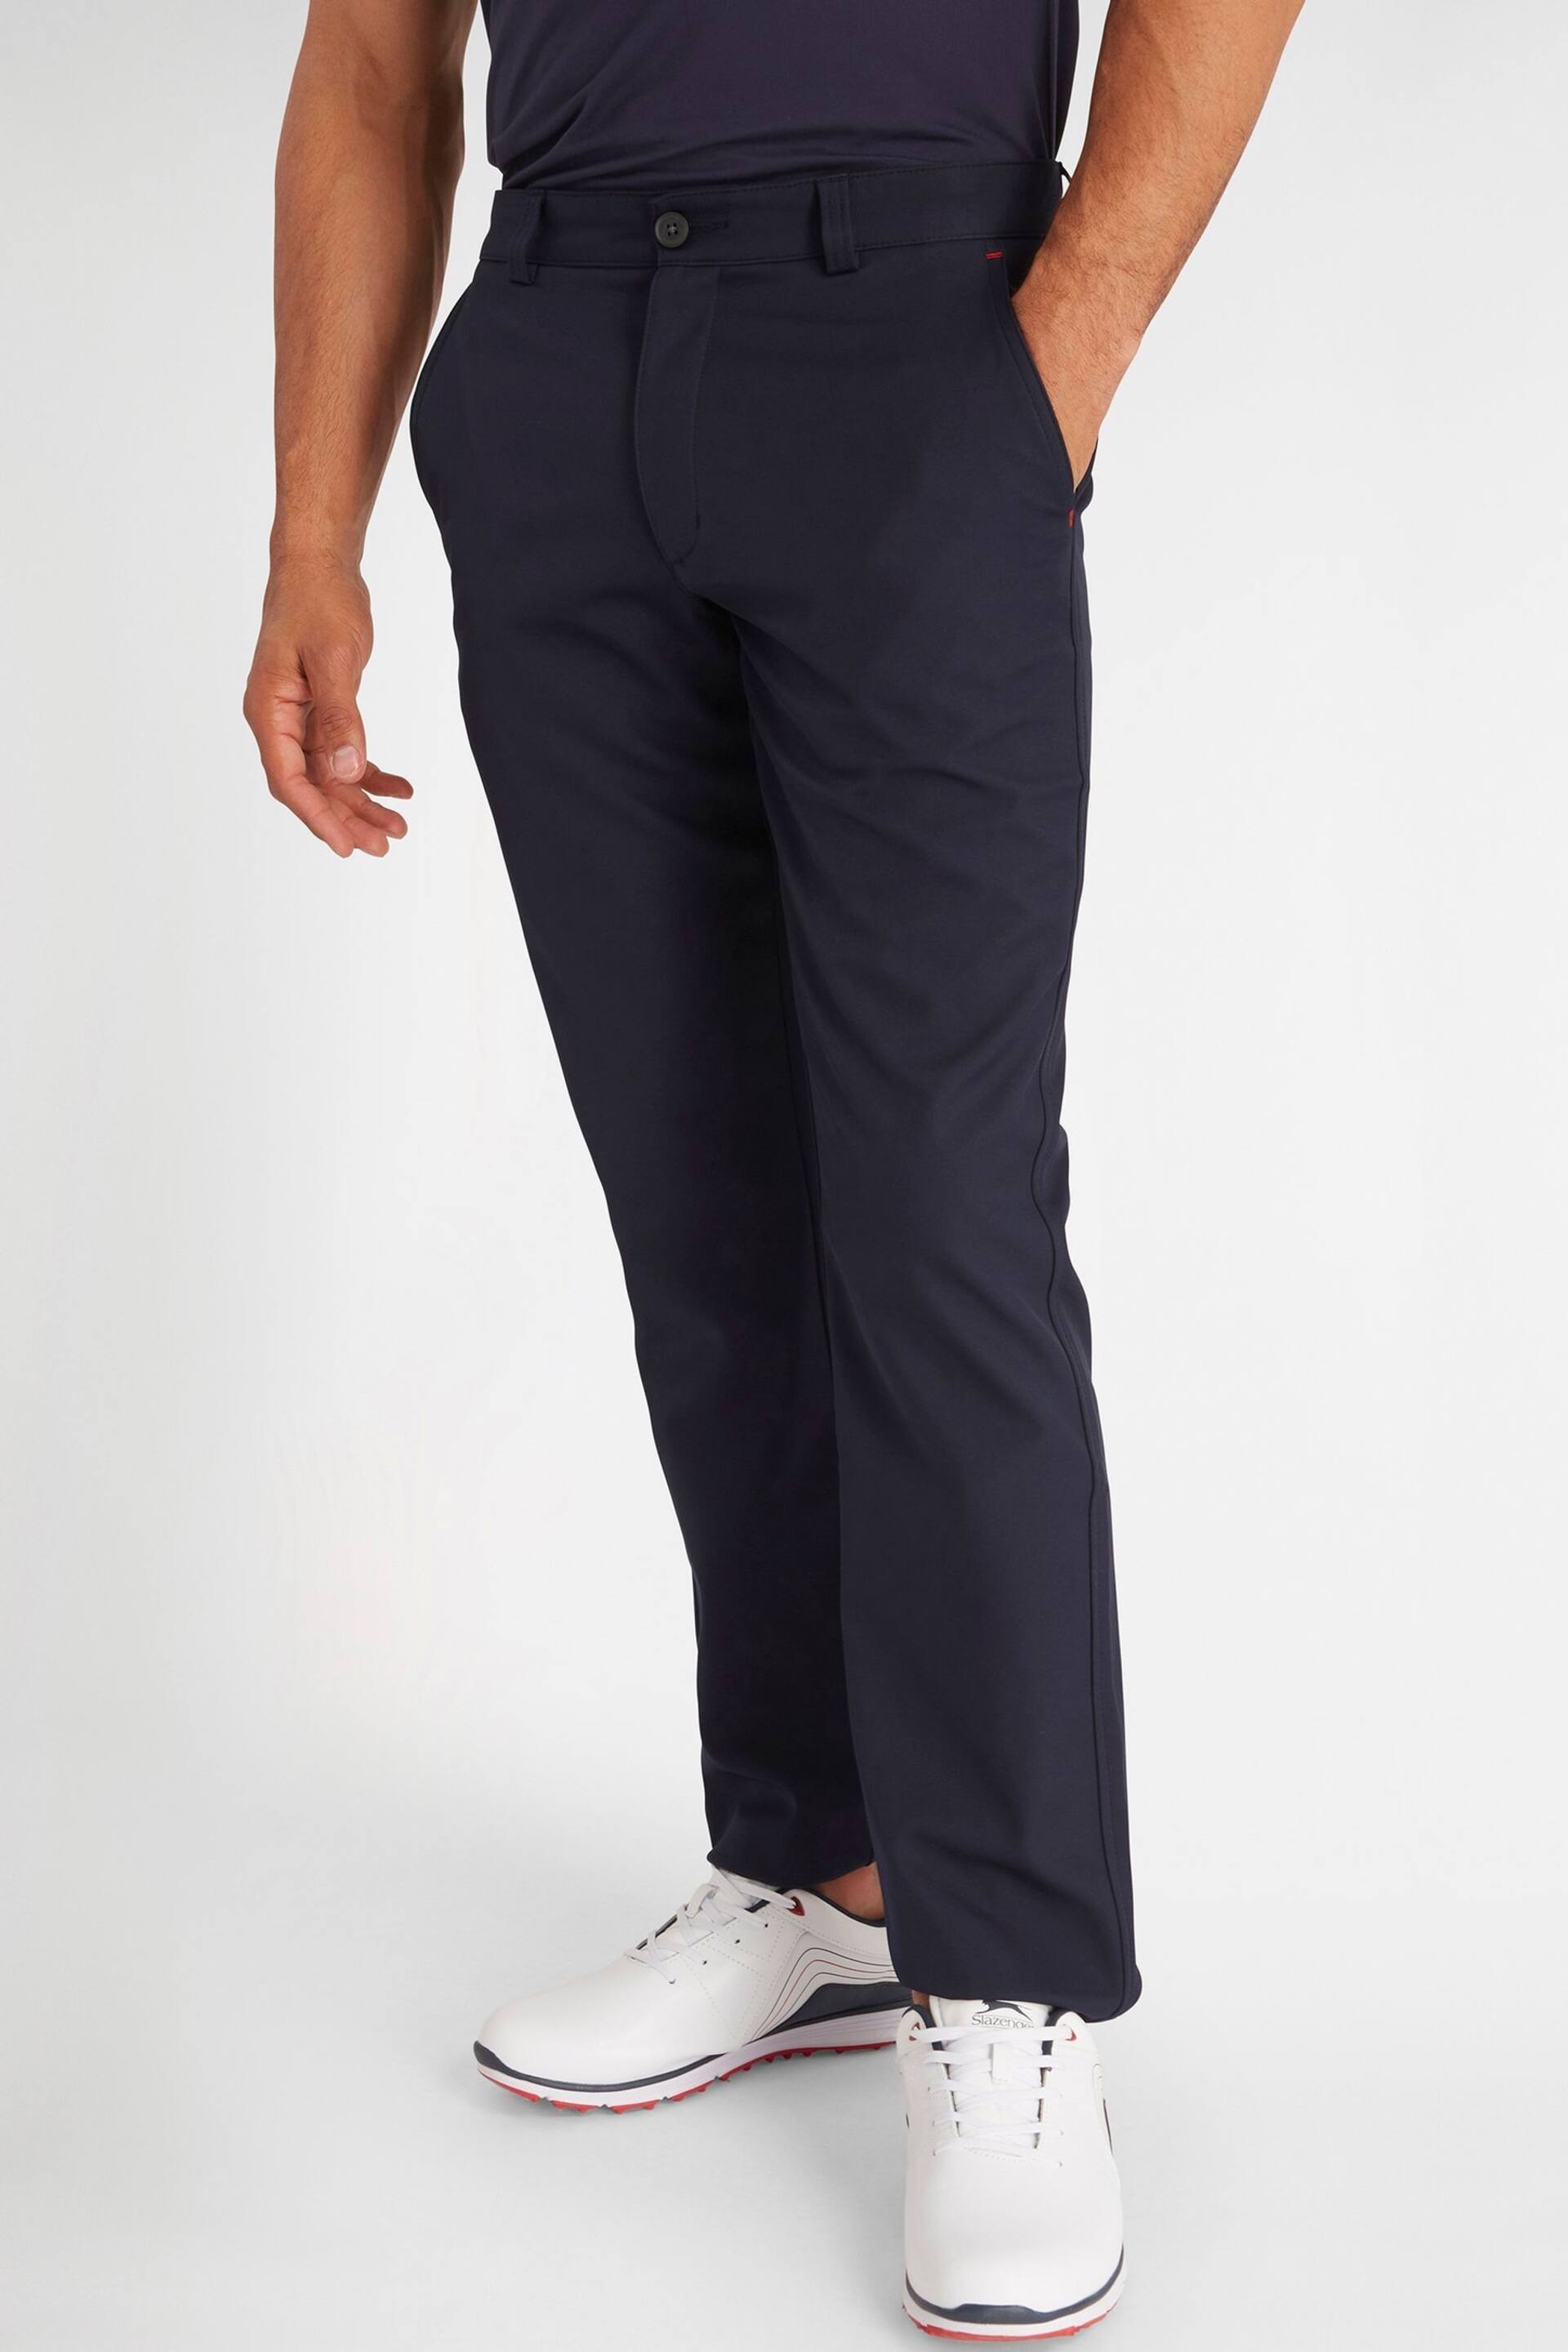 Calvin Klein Golf Black Regular Fit Tech Warm Trousers - Image 1 of 8